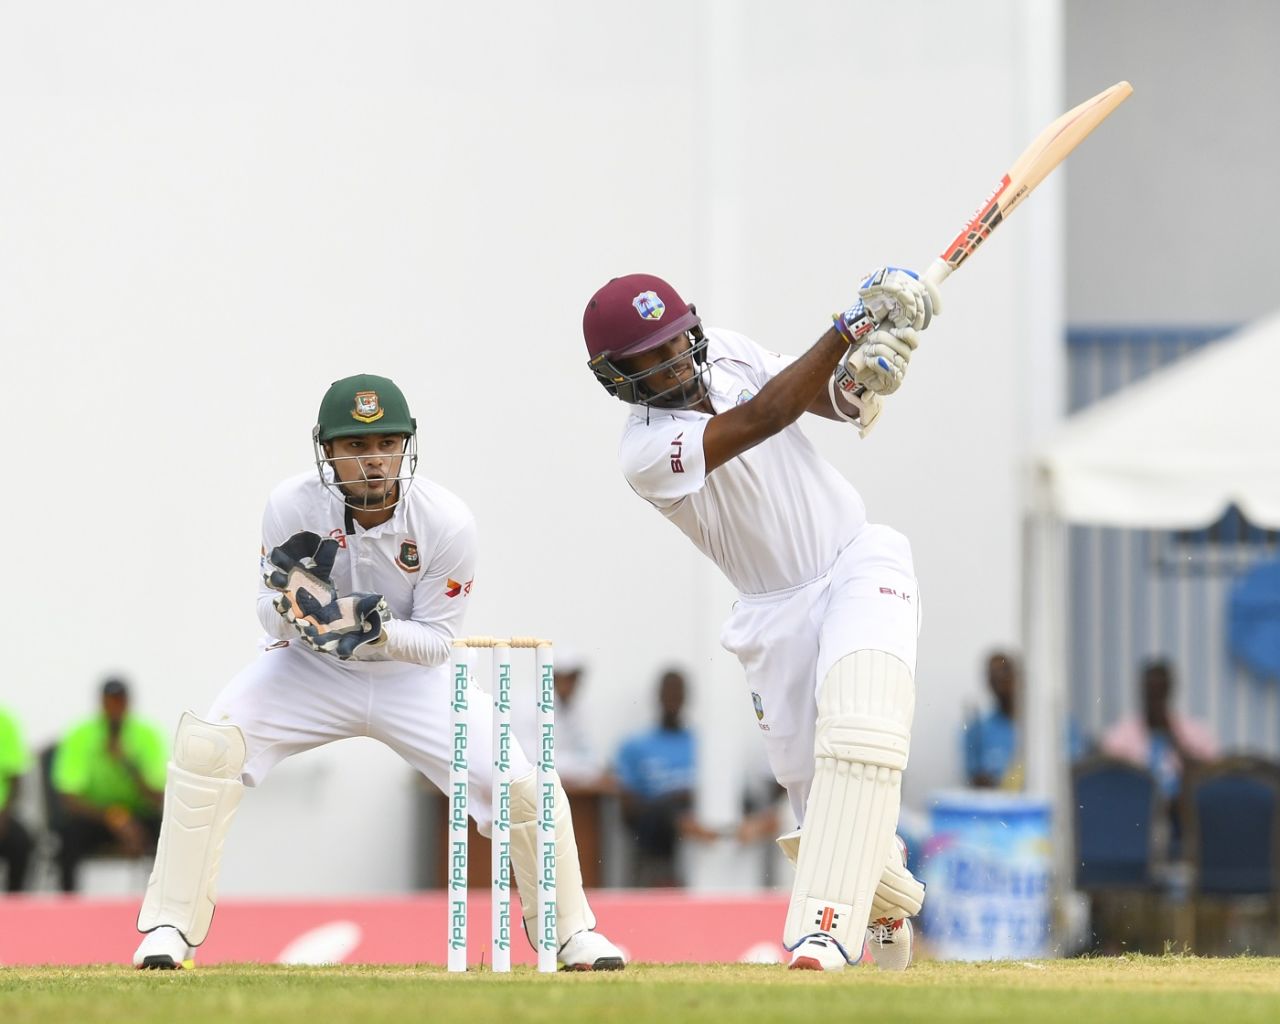 Kraigg Brathwaite goes full on T20 on the ball, West Indies v Bangladesh, 1st Test, North Sound, 1st day, July 4, 2018